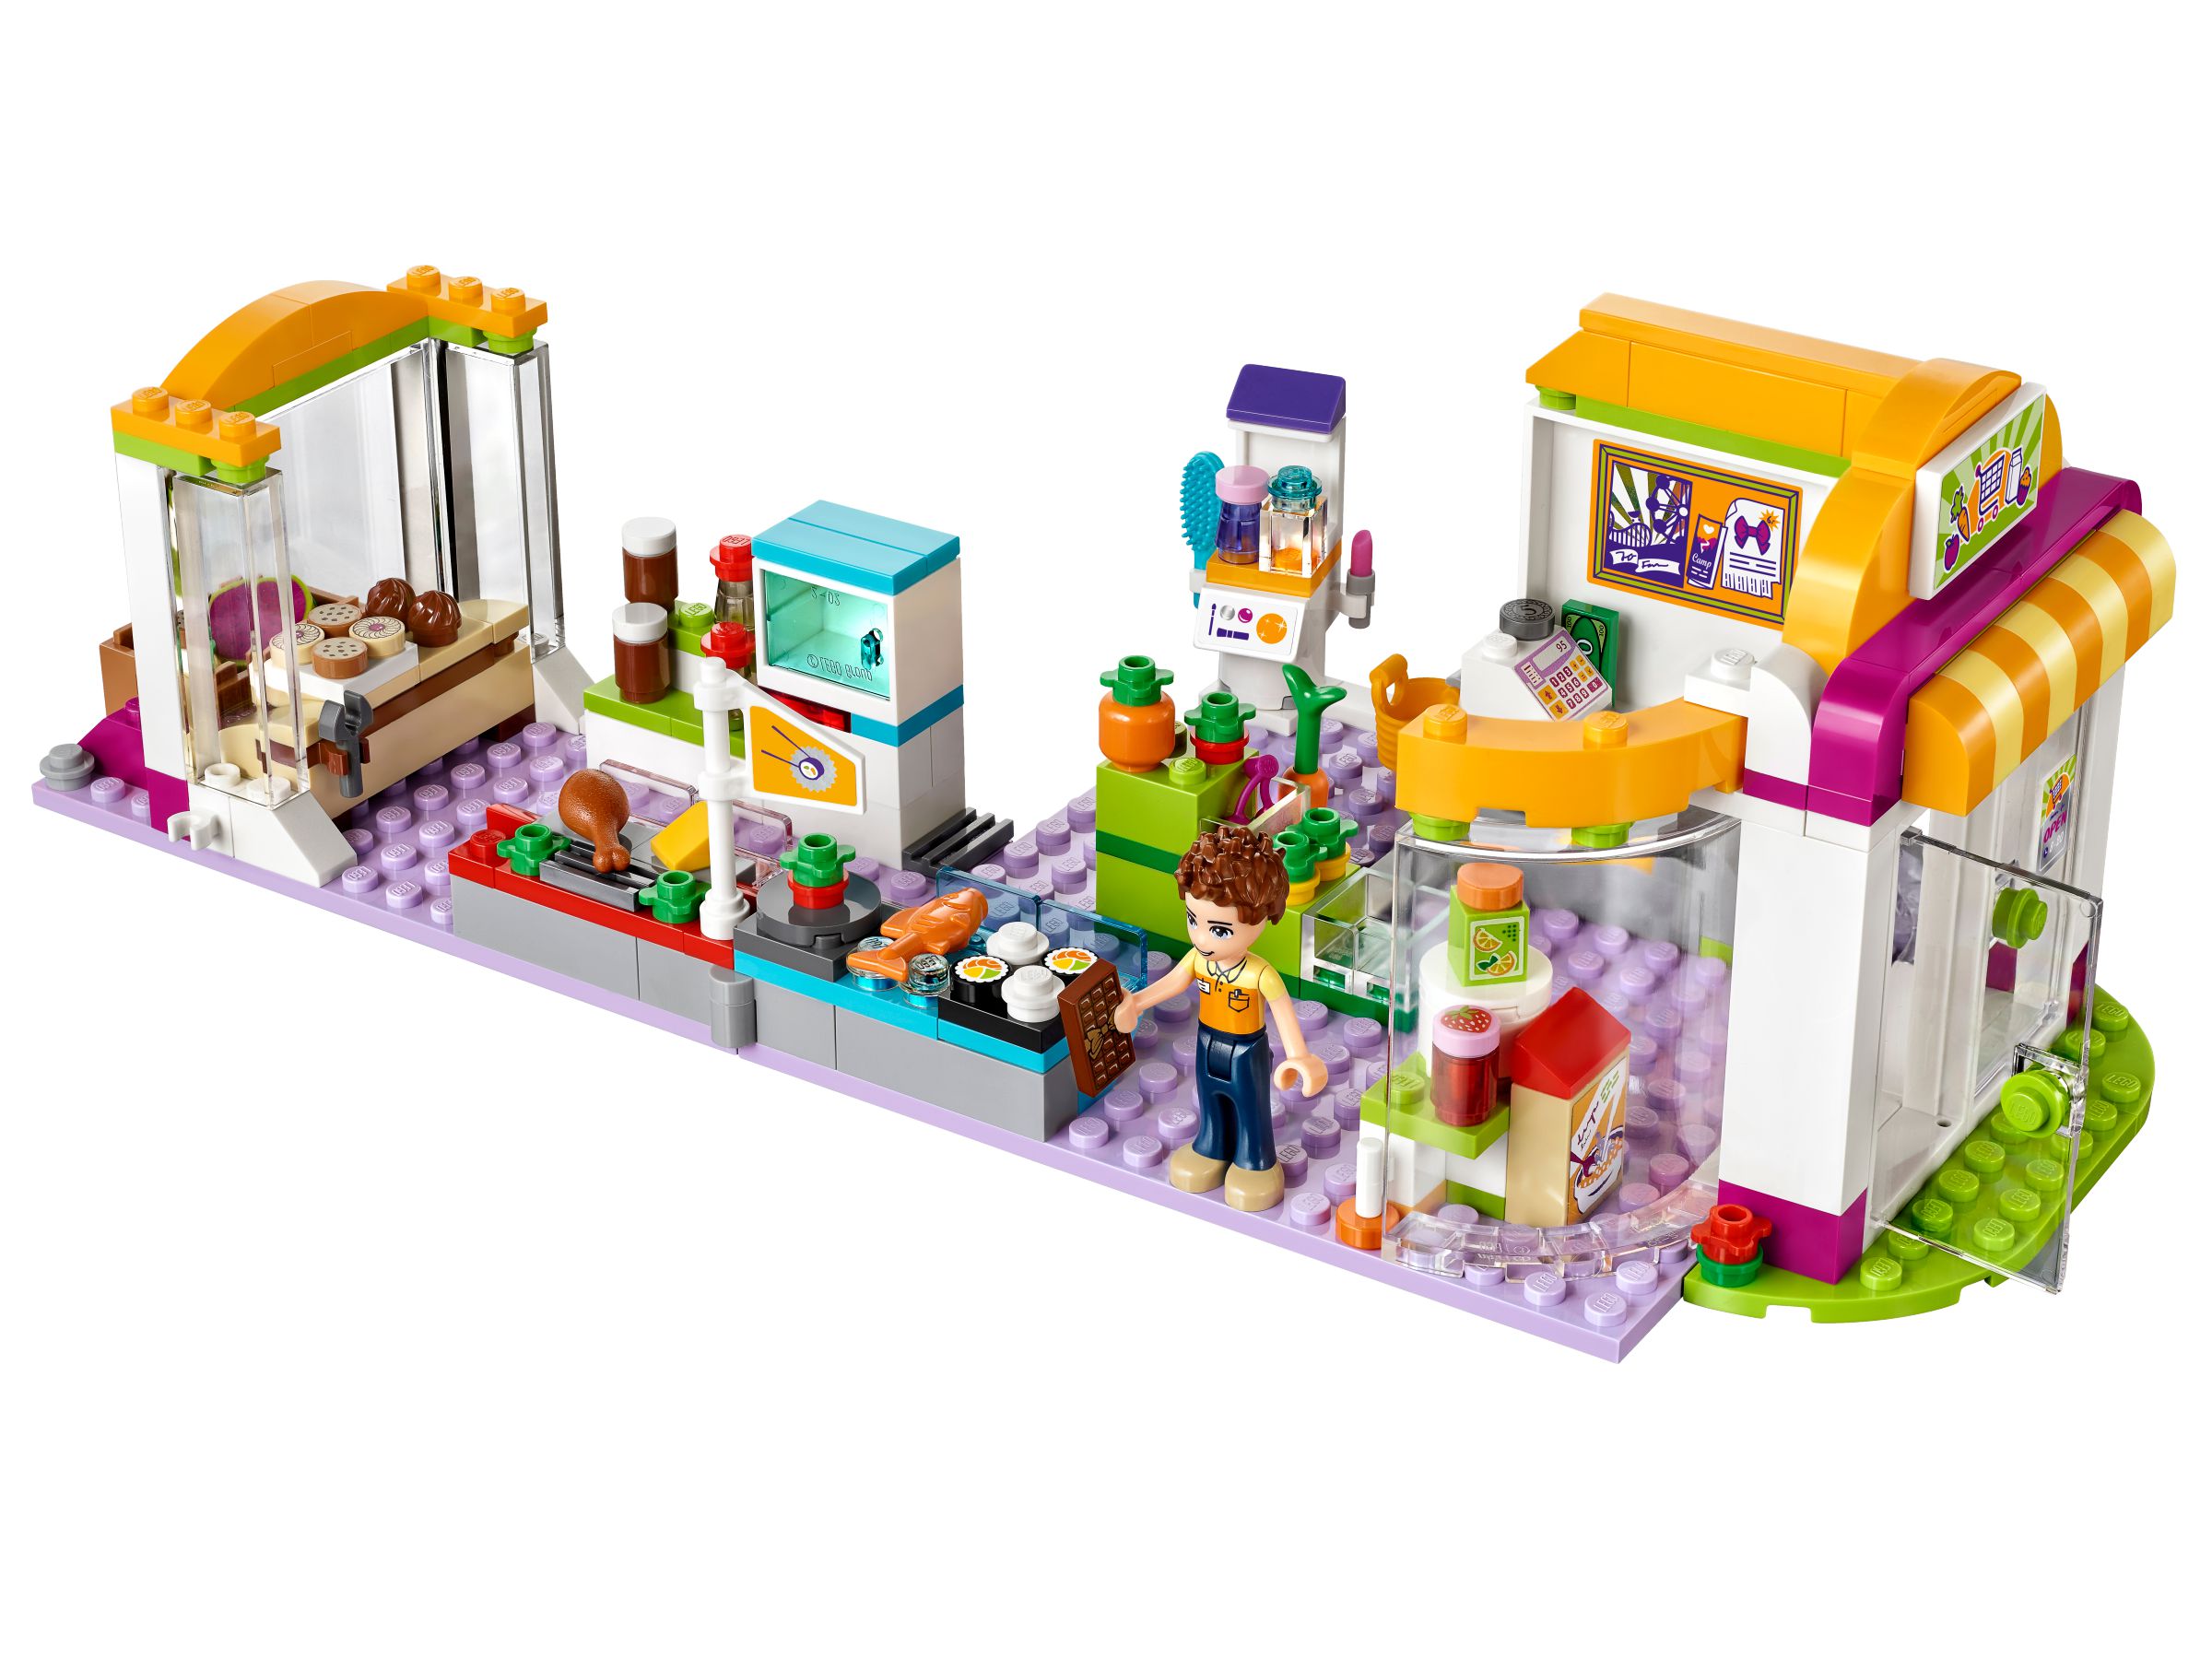 LEGO Friends 41118 Heartlake Supermarkt LEGO_41118_alt3.jpg